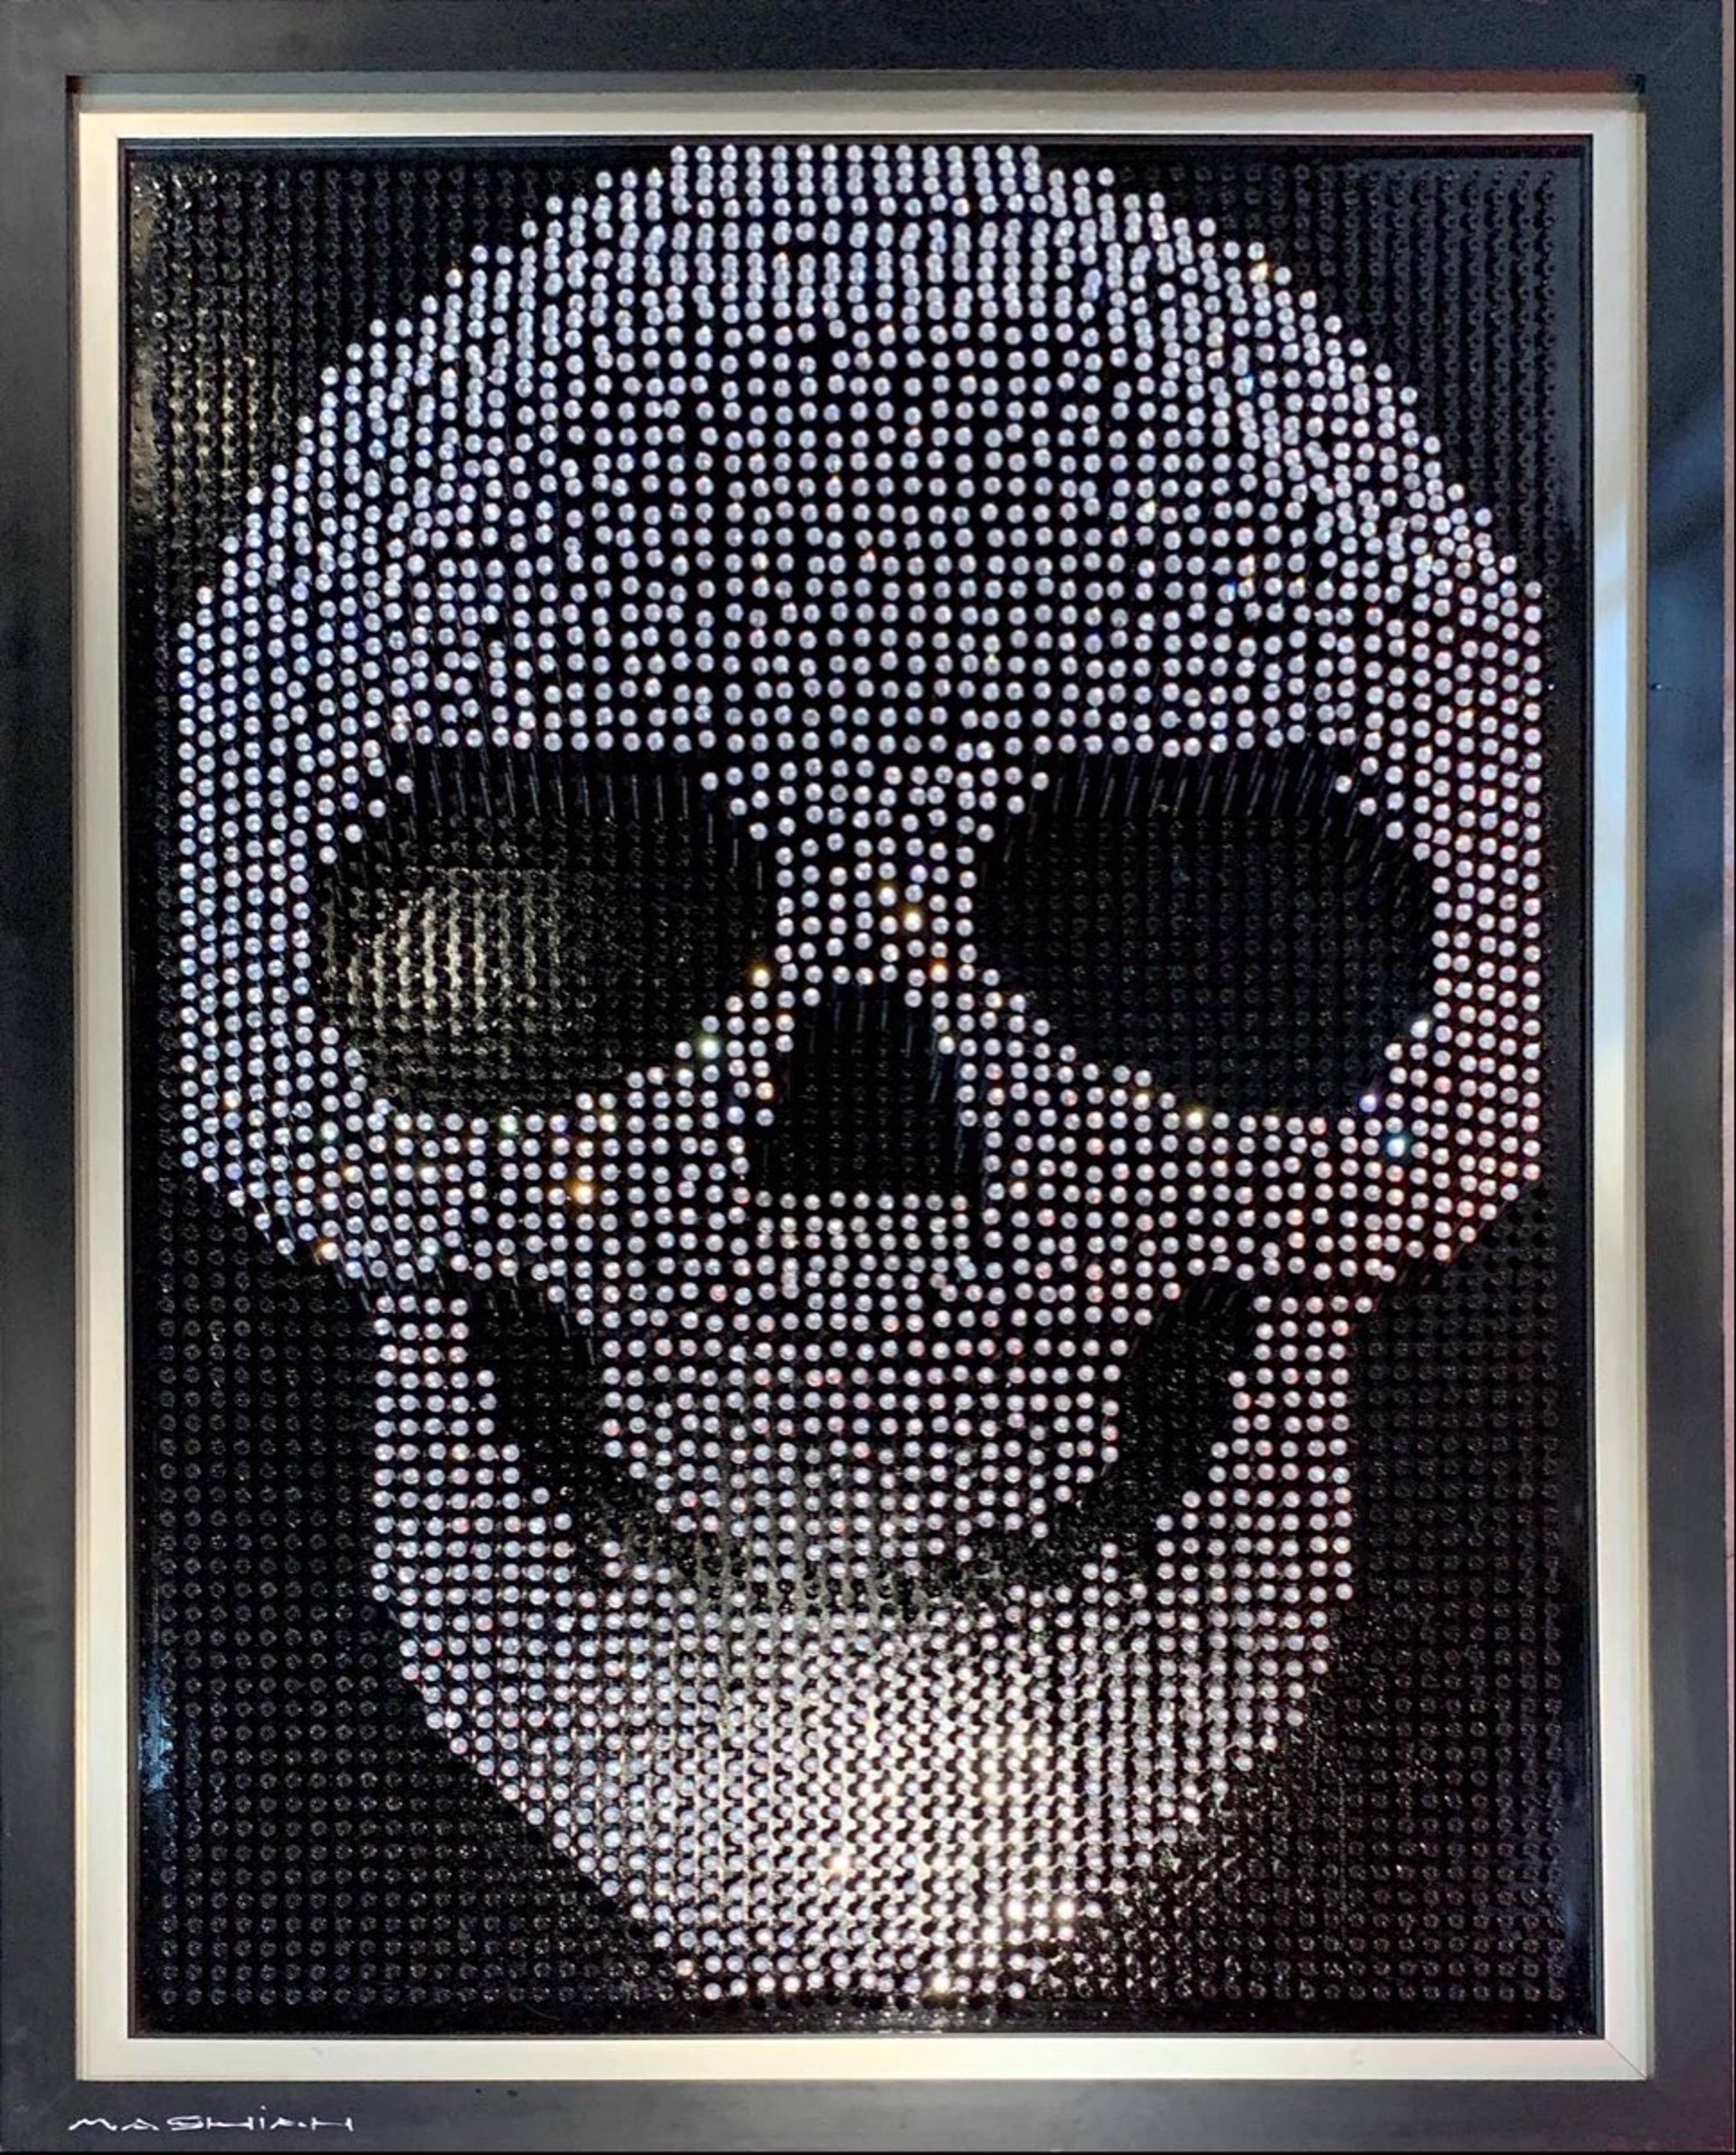 "Skull" by Screw Art Board by Efi Mashiah